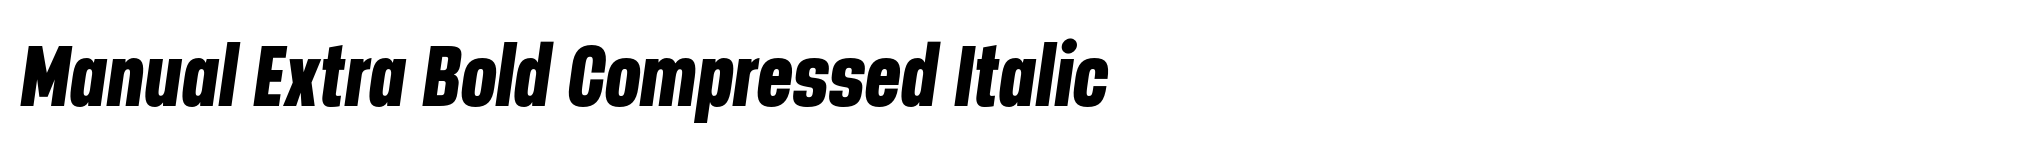 Manual Extra Bold Compressed Italic image